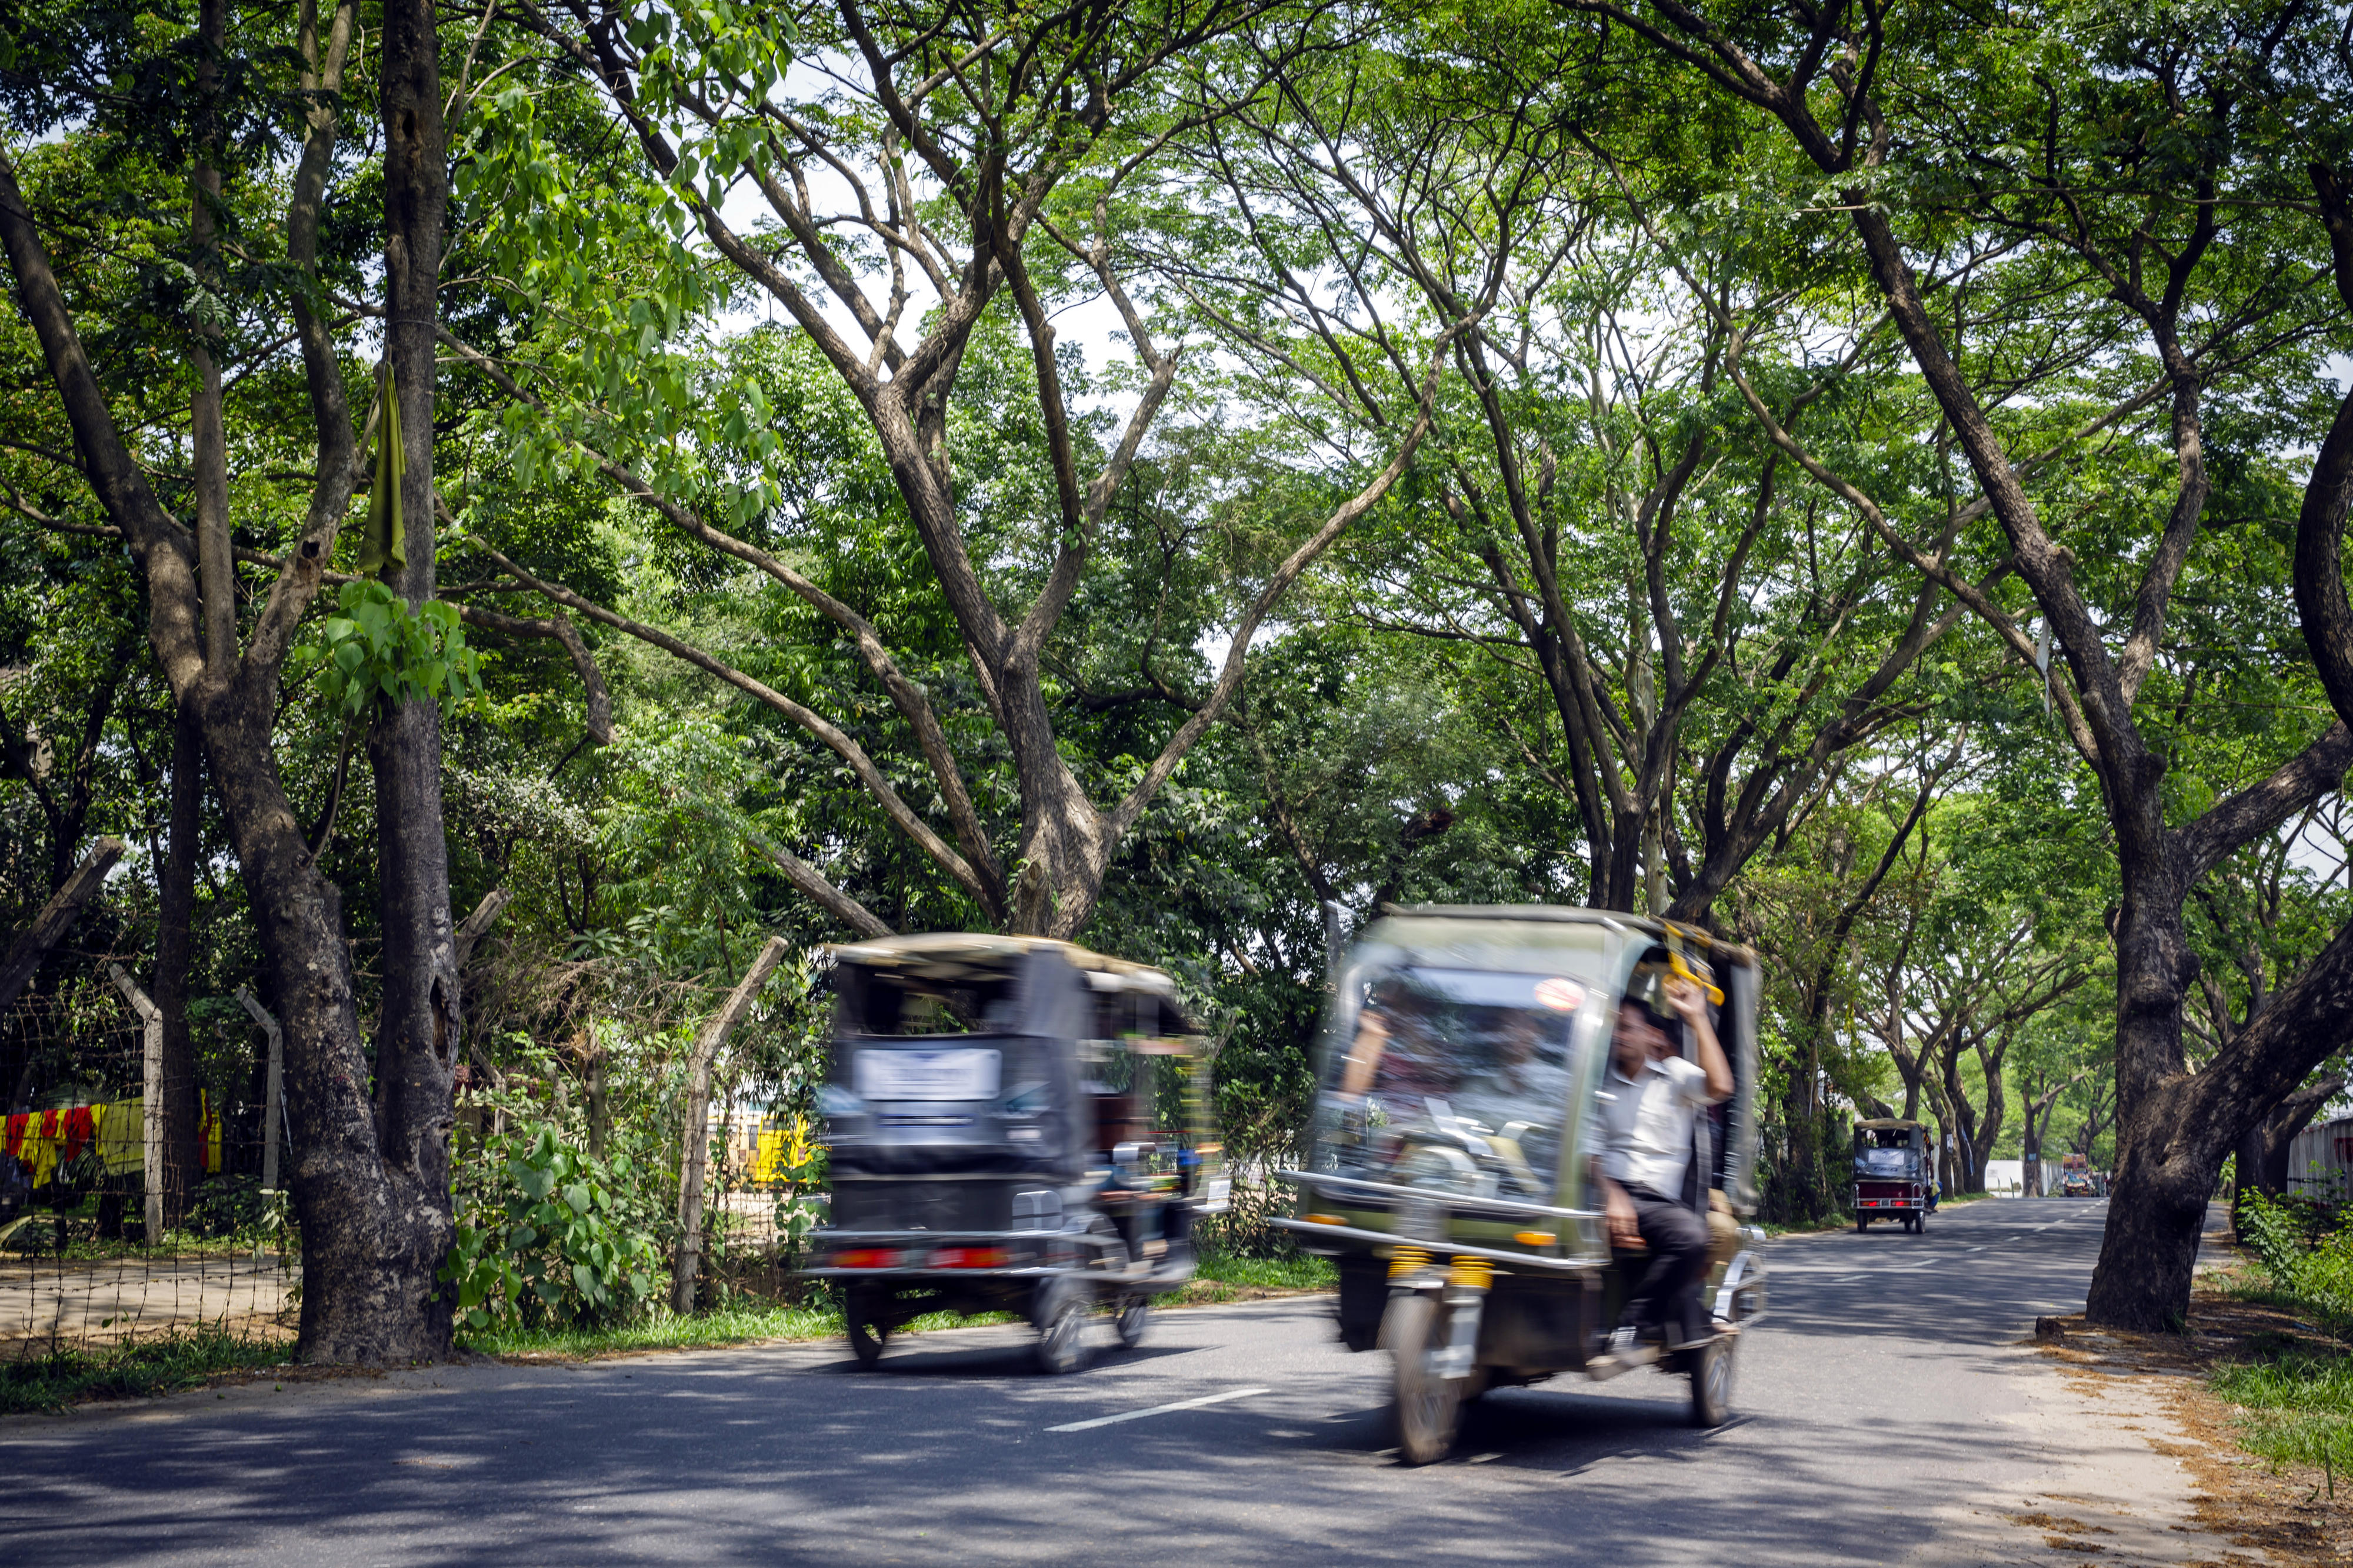 Two tuk-tuks meet on a tree-lined road in Bangladesh